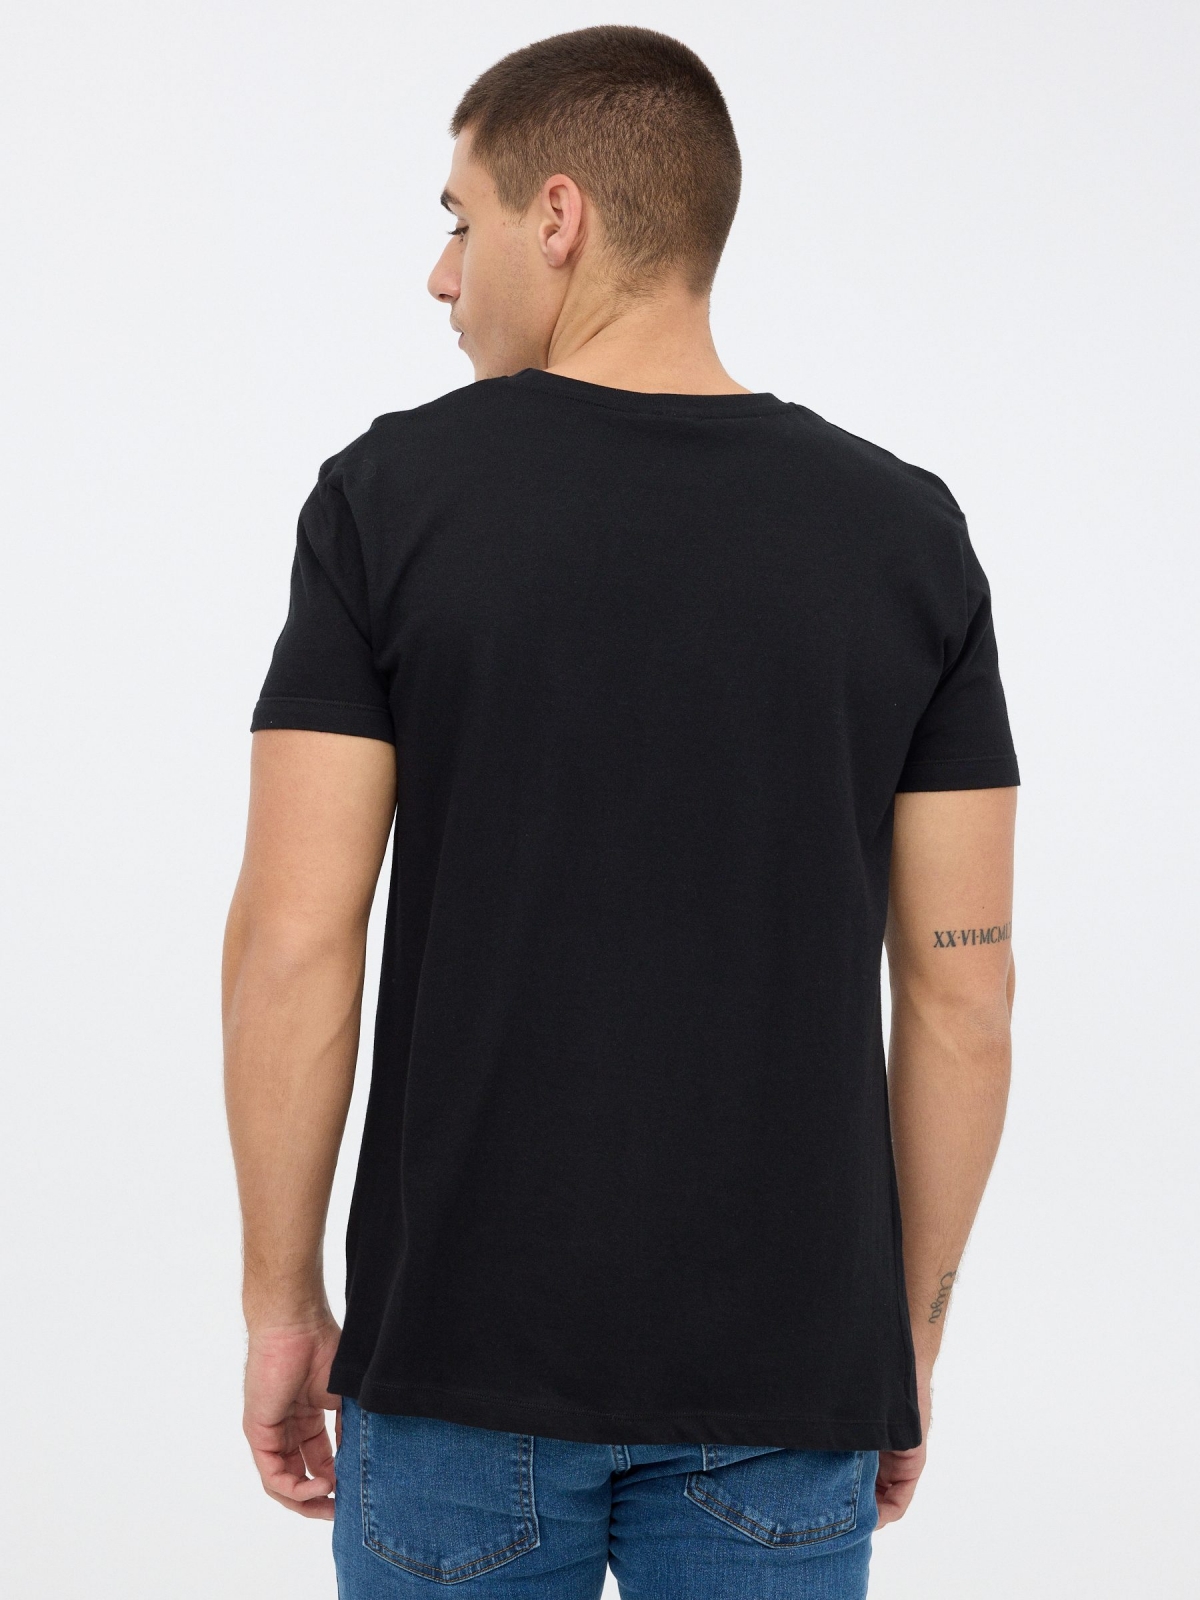 T-shirt Avatar preto vista meia traseira